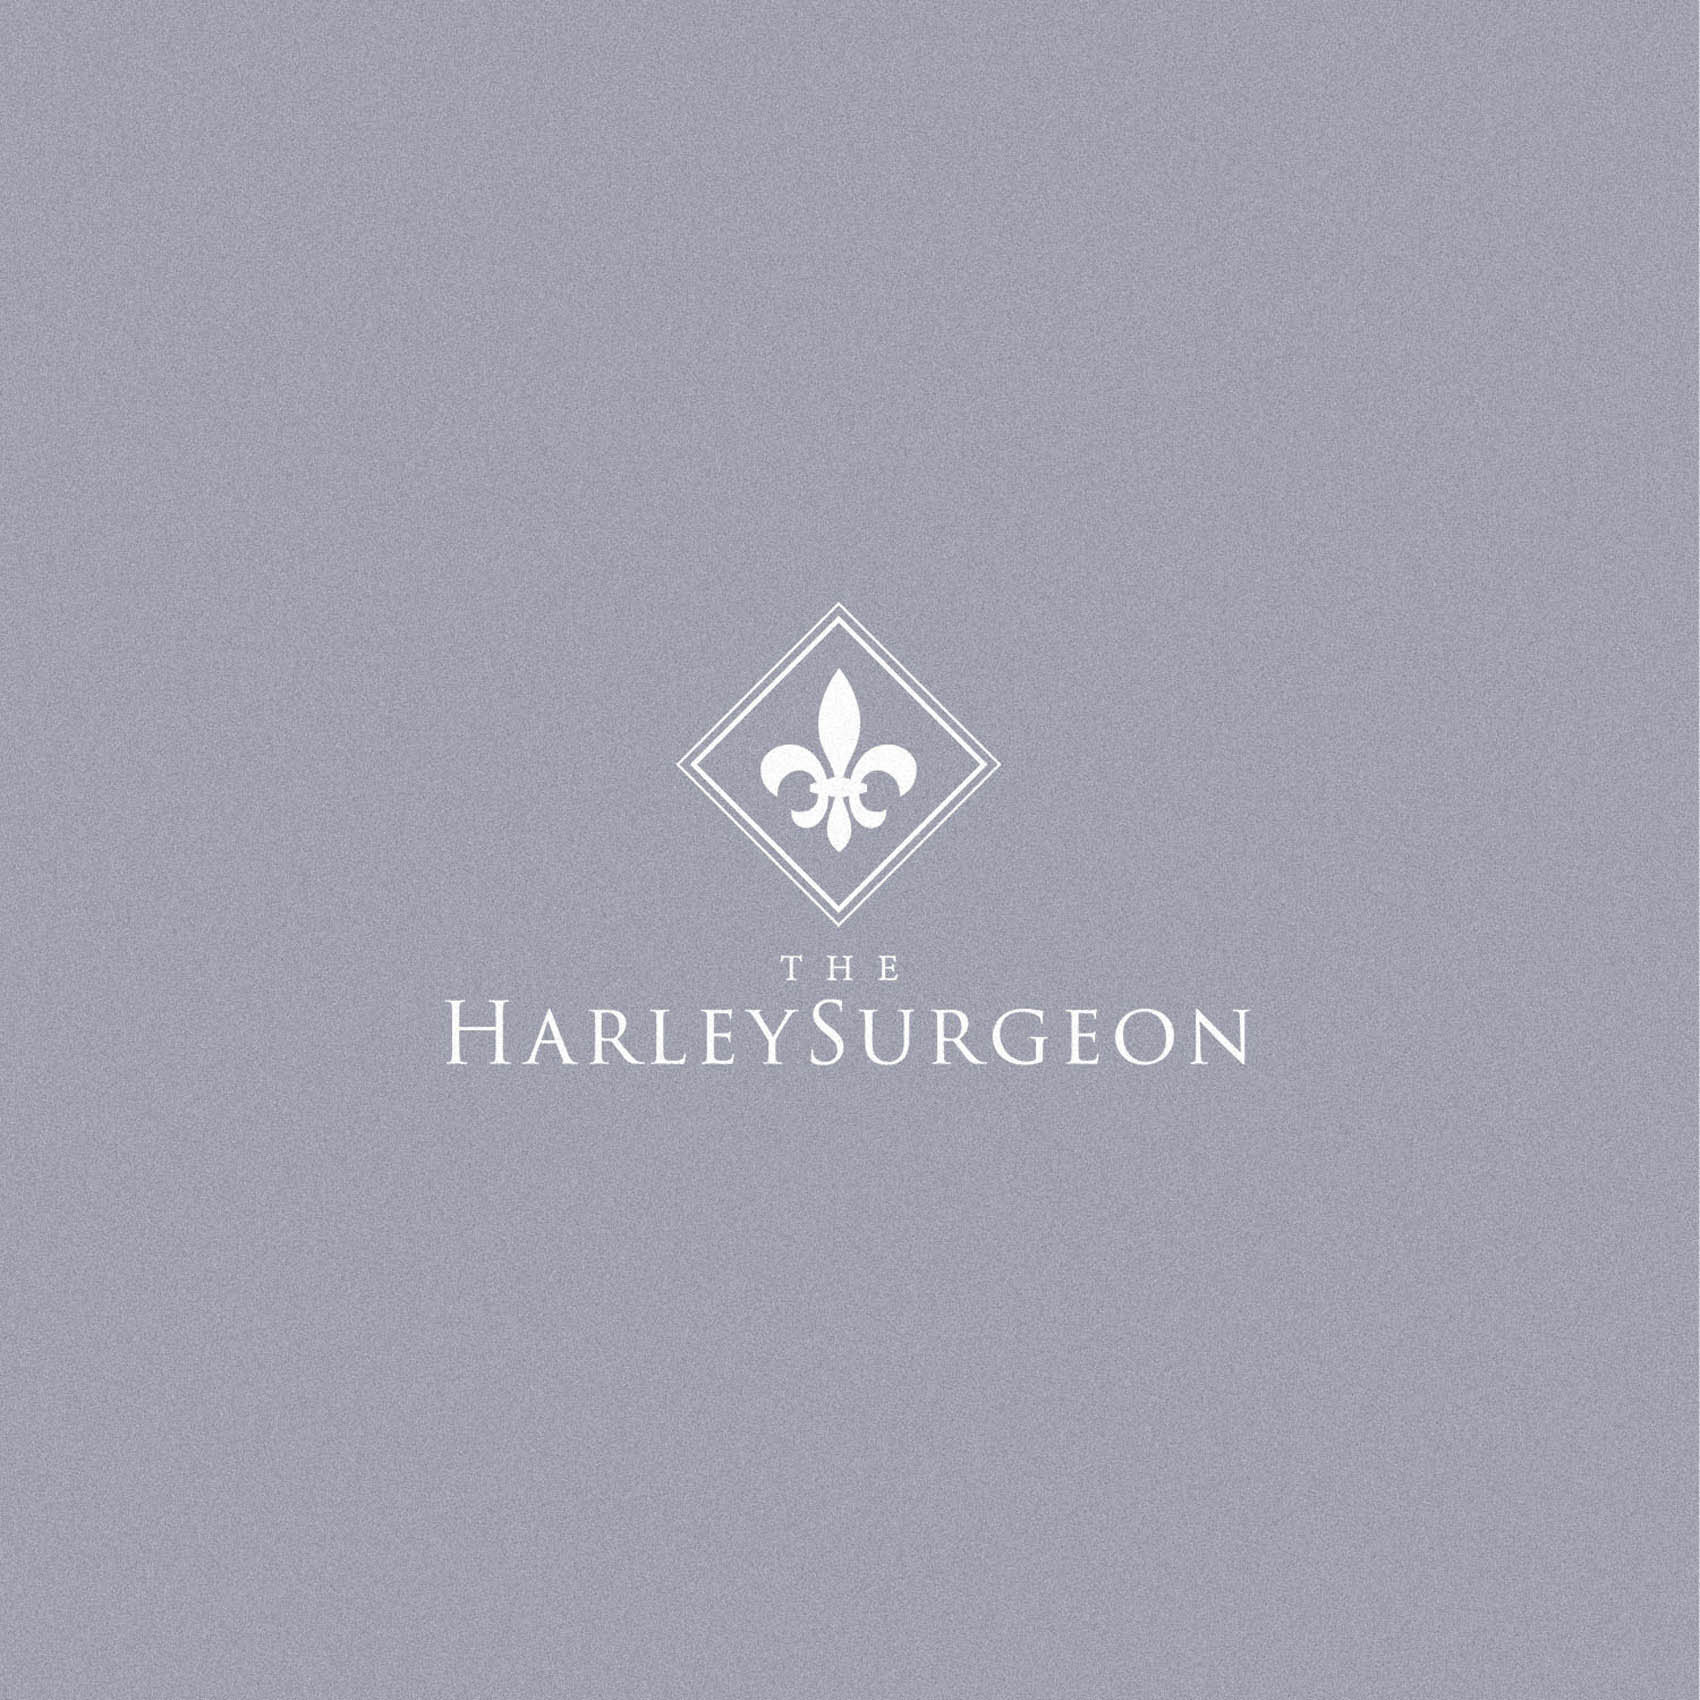 The Harley Surgeon - Luxury High End brand identity logo design london11